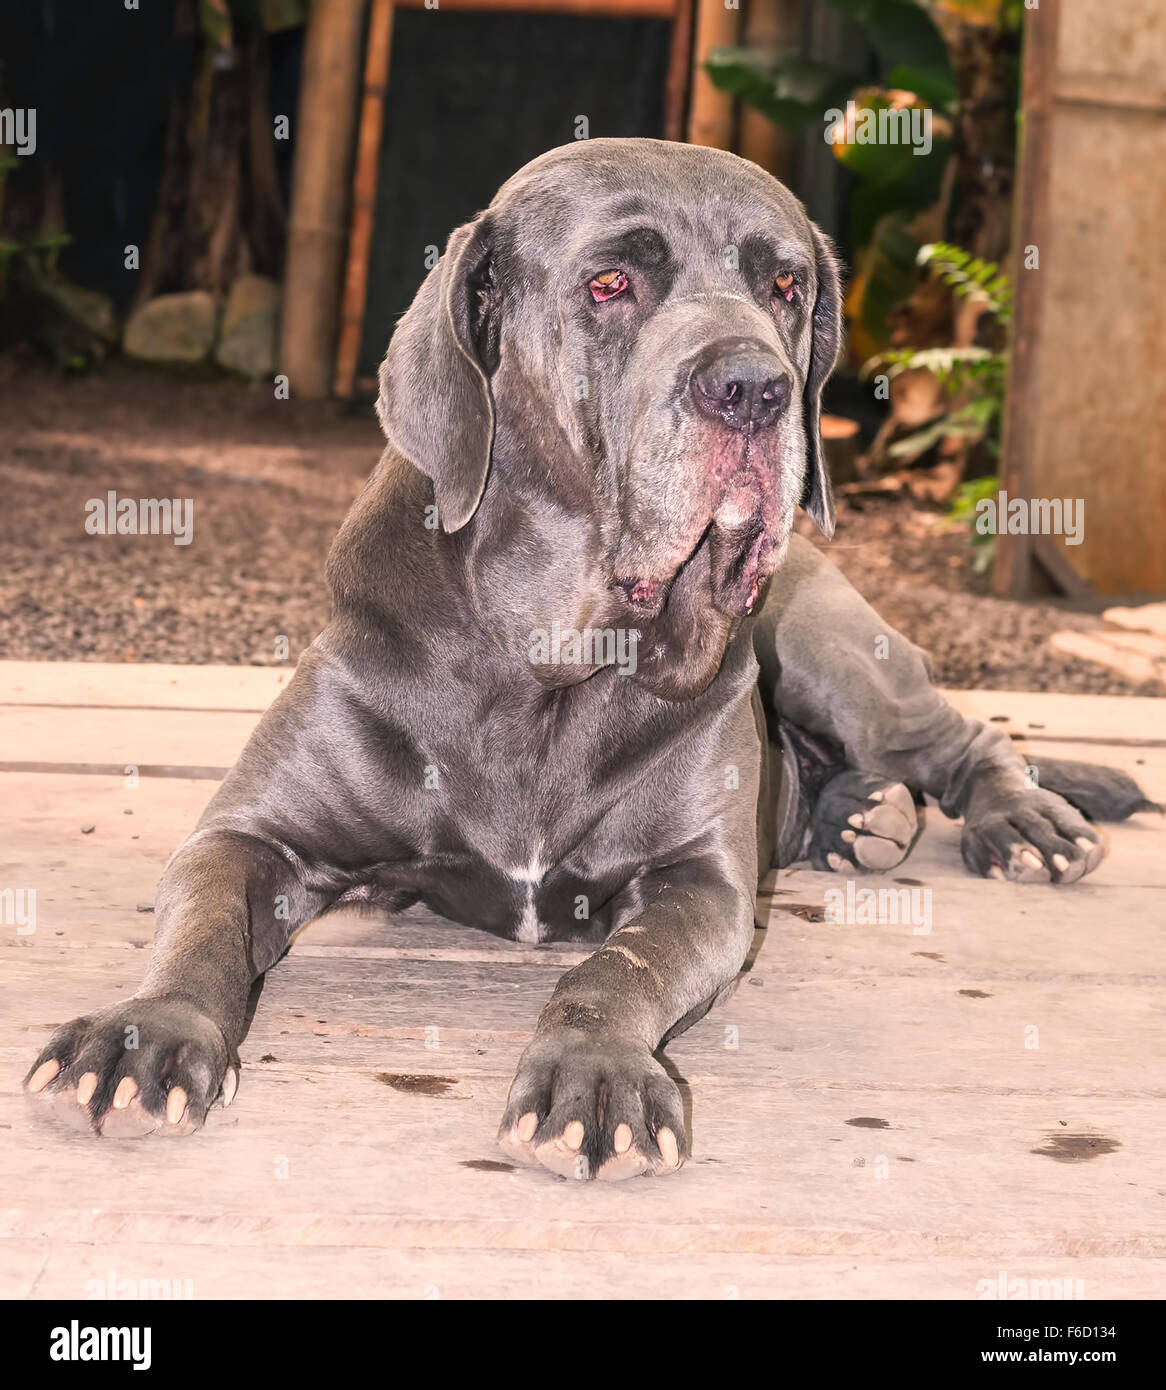 Neapolitan Mastiff Massive Dog Looking To The Camera Stock Photo